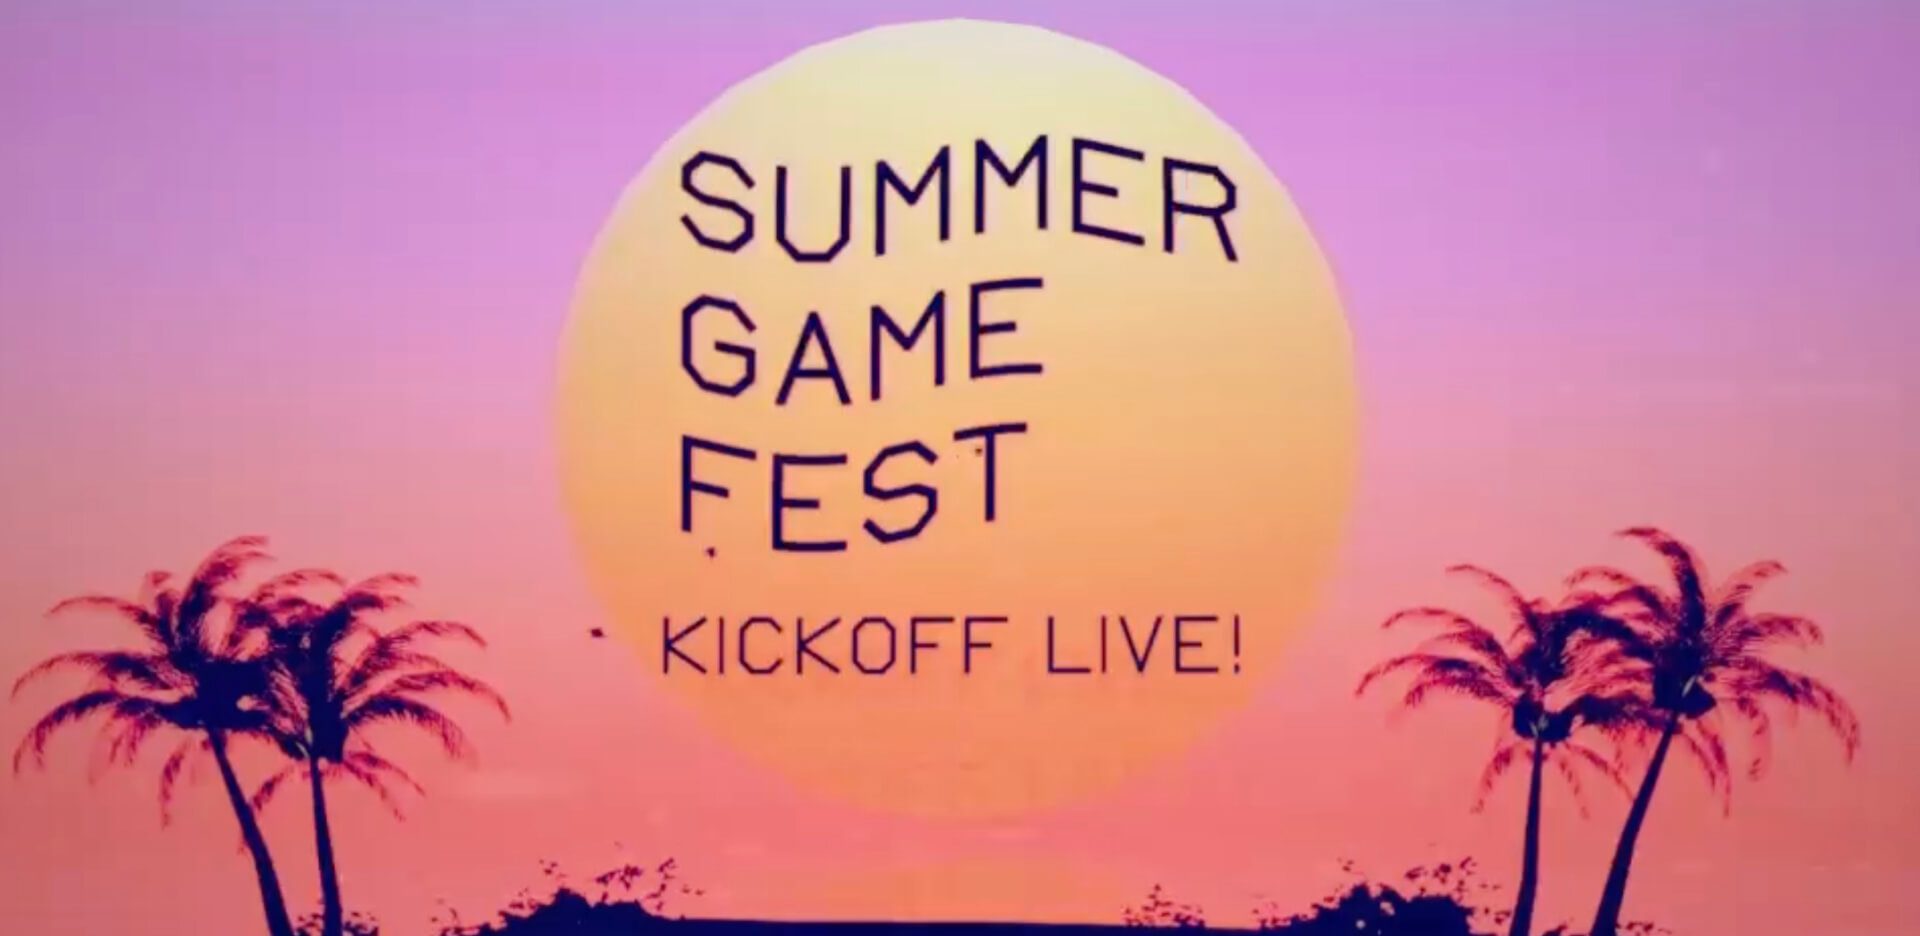 Summer Game Fest Kicks Off on June 10th